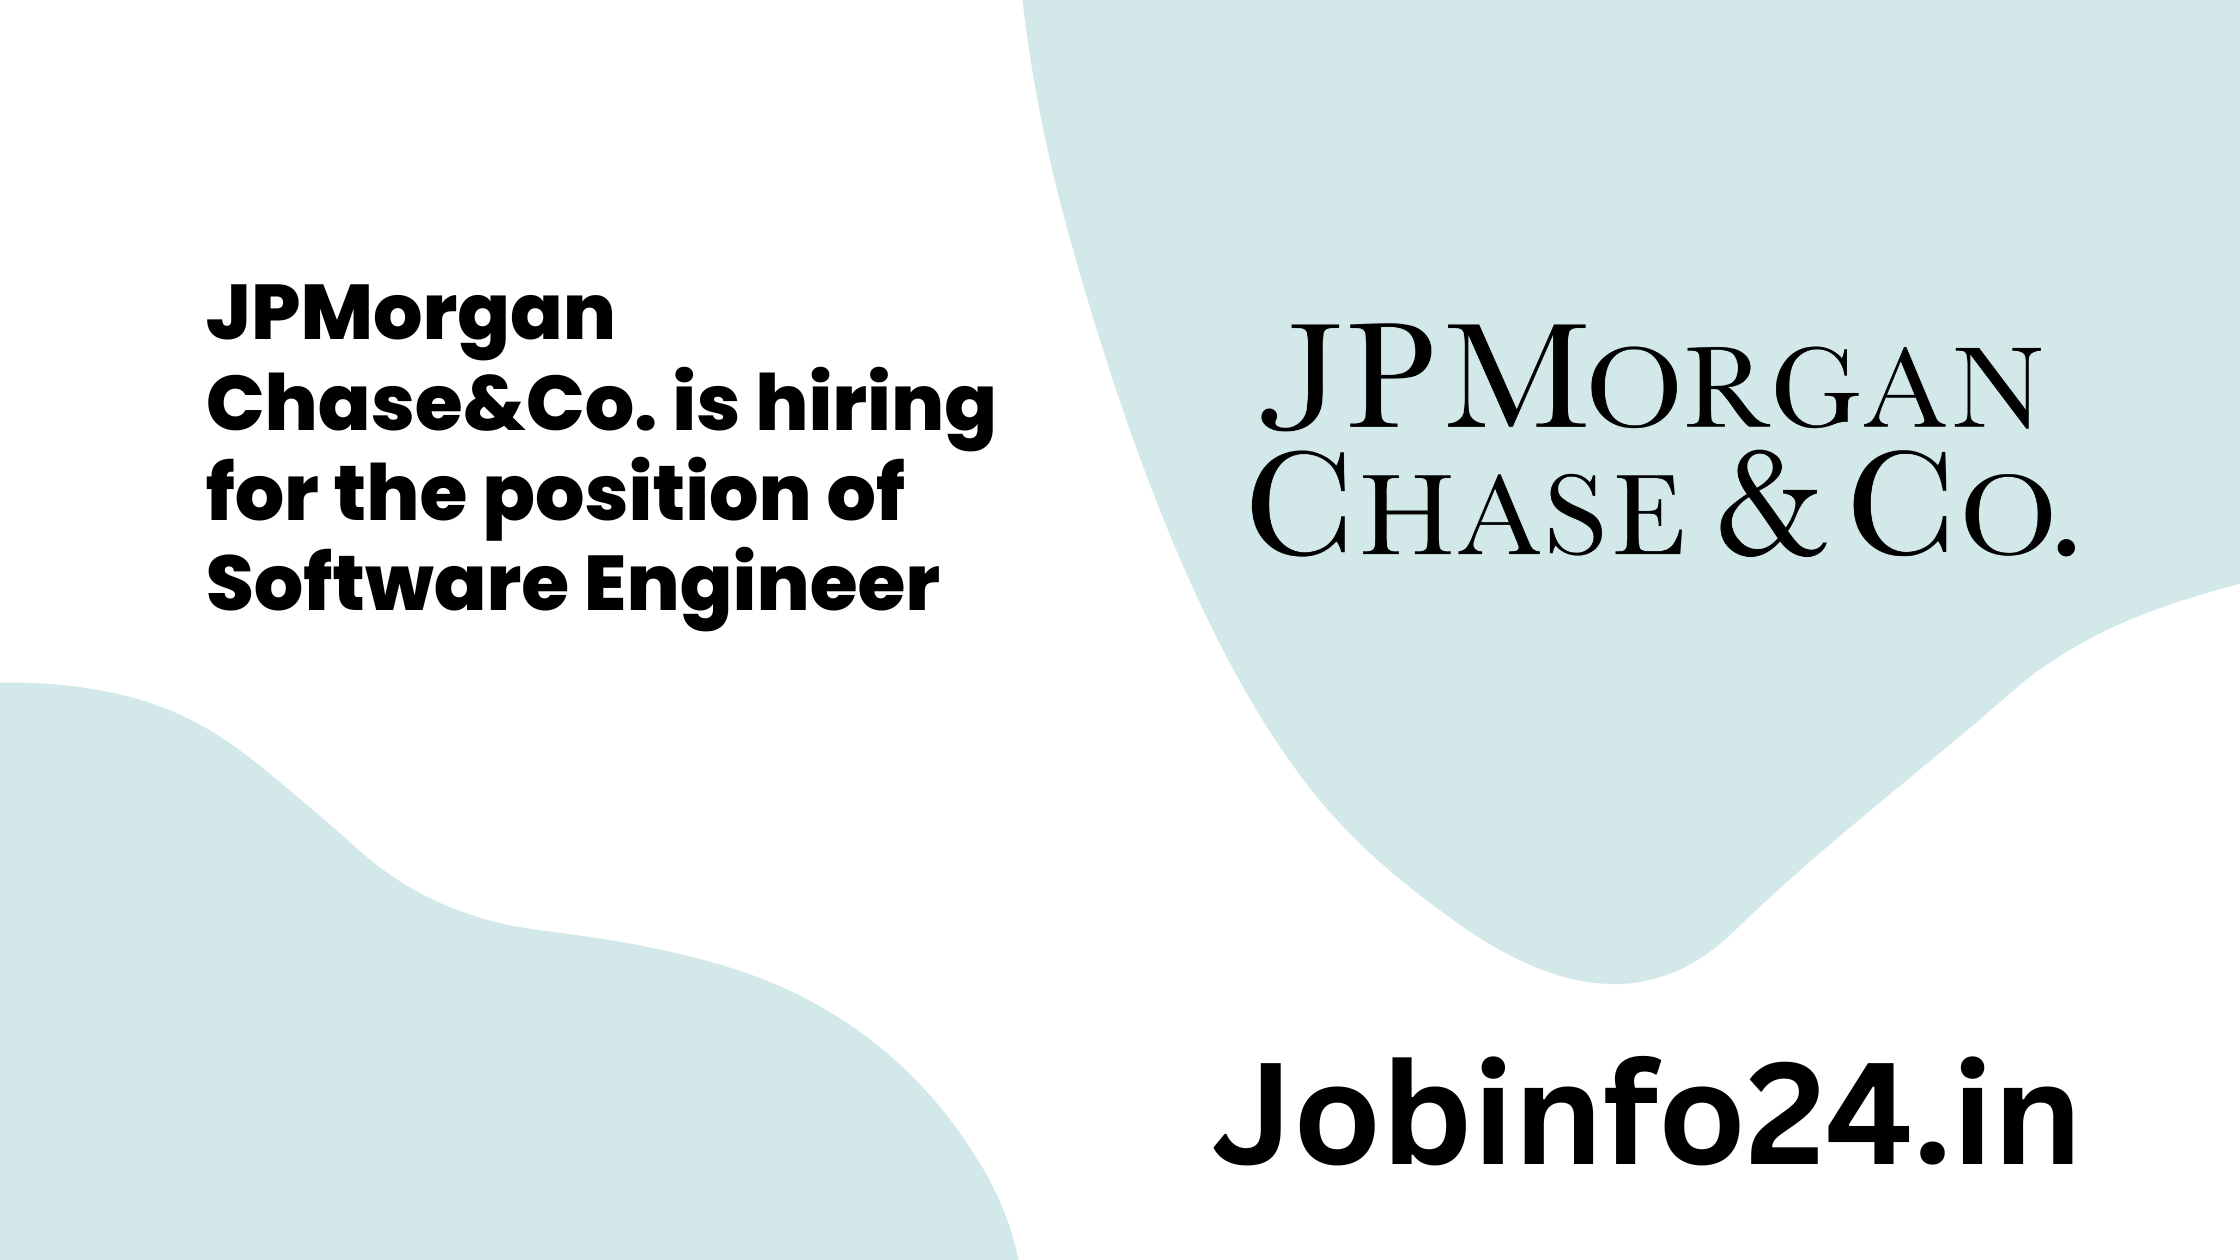 JPMorgan Chase&Co